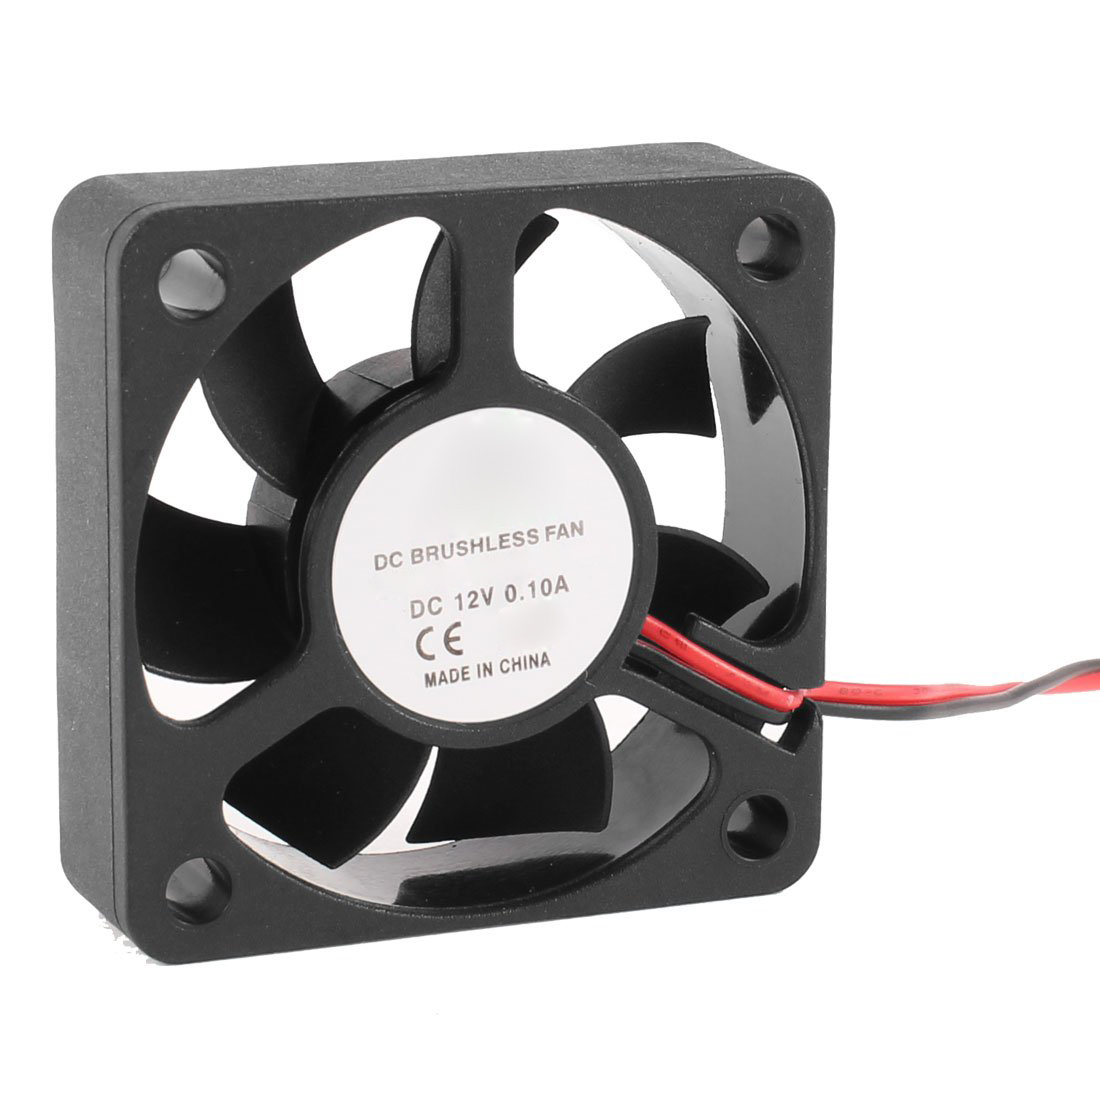 GTFS-50mm 12V 2Pin 4000RPM Sleeve Bearing PC Case CPU Cooler Cooling Fan